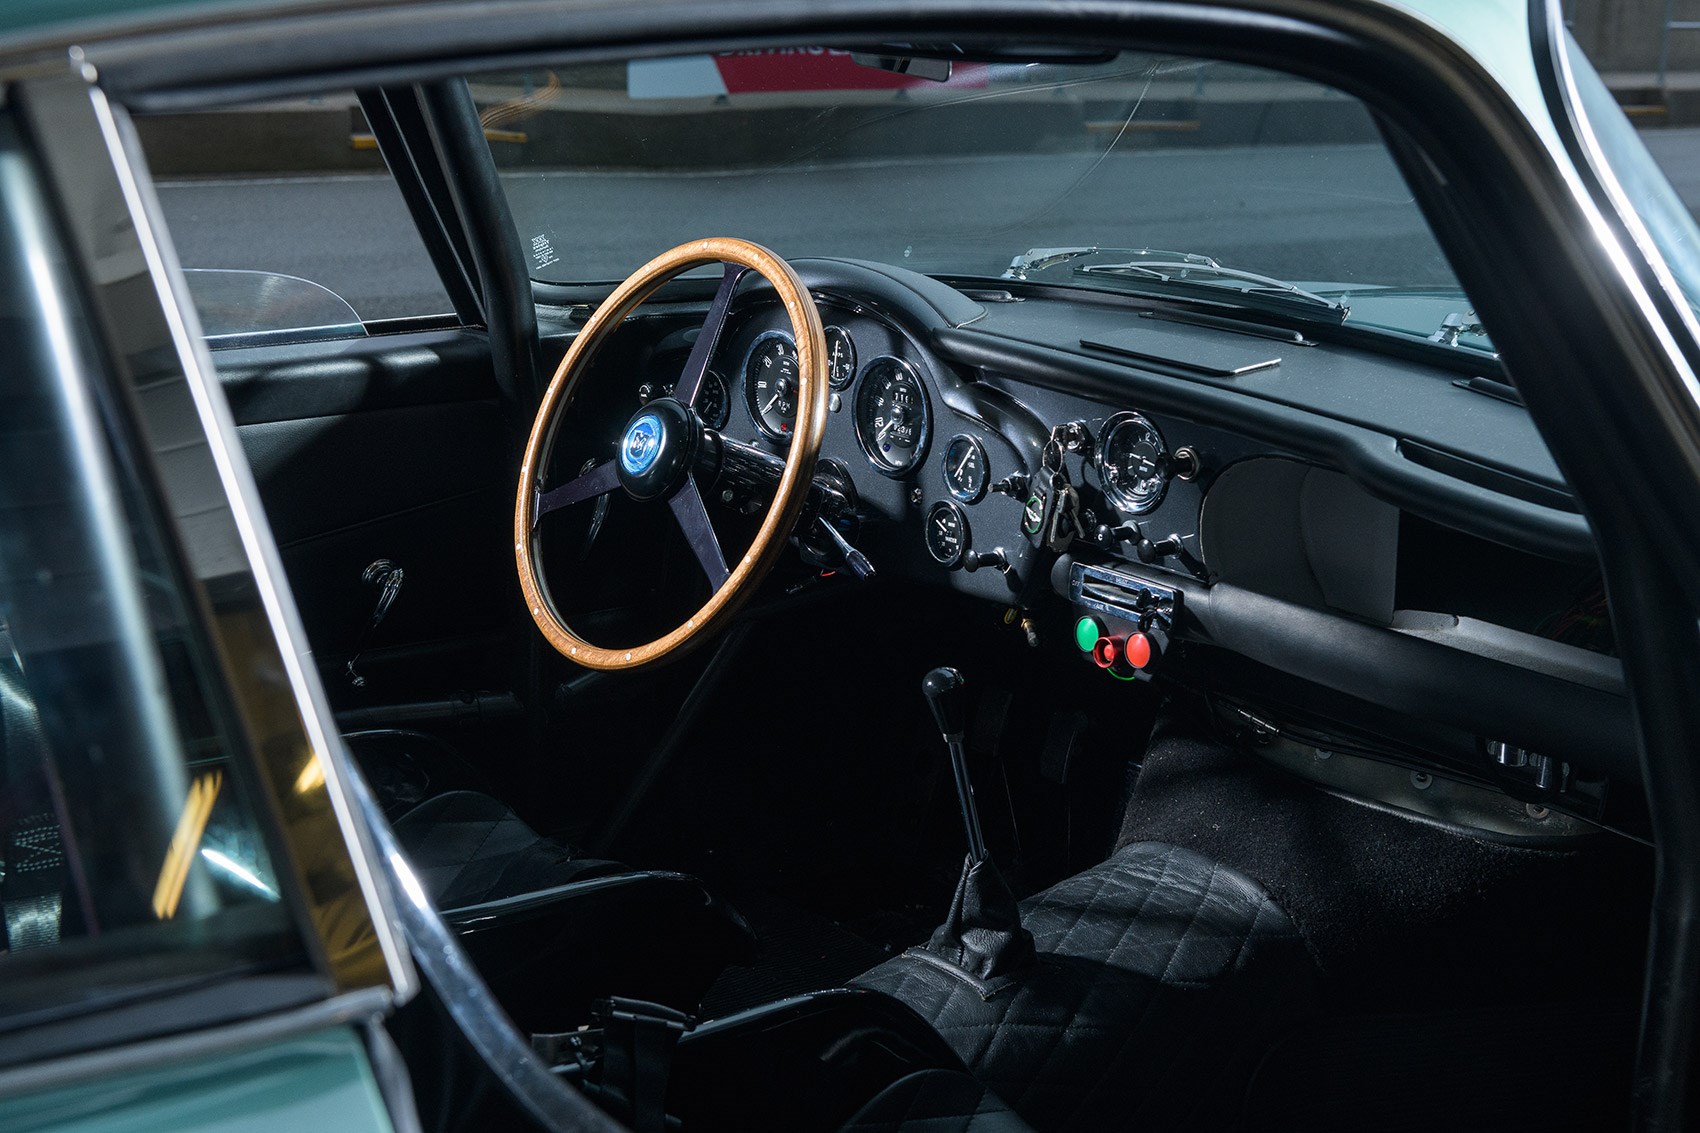 Inside the Aston Martin DB4 GT Continuation cabin